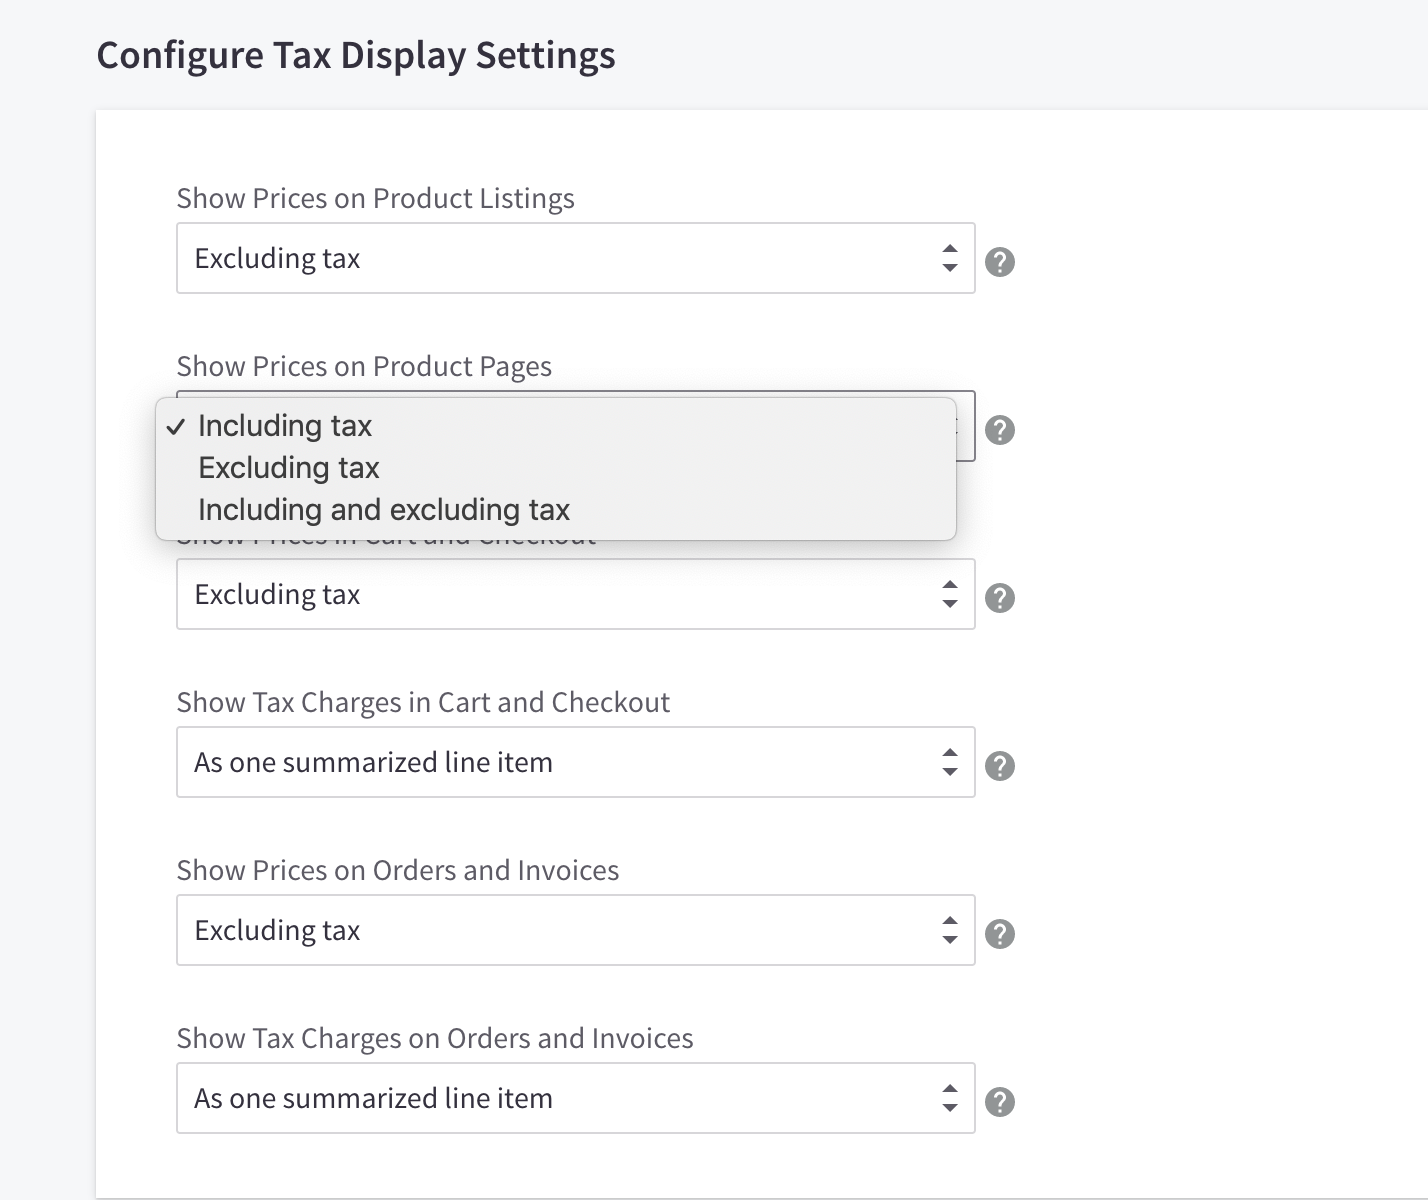 Configure tax display settings